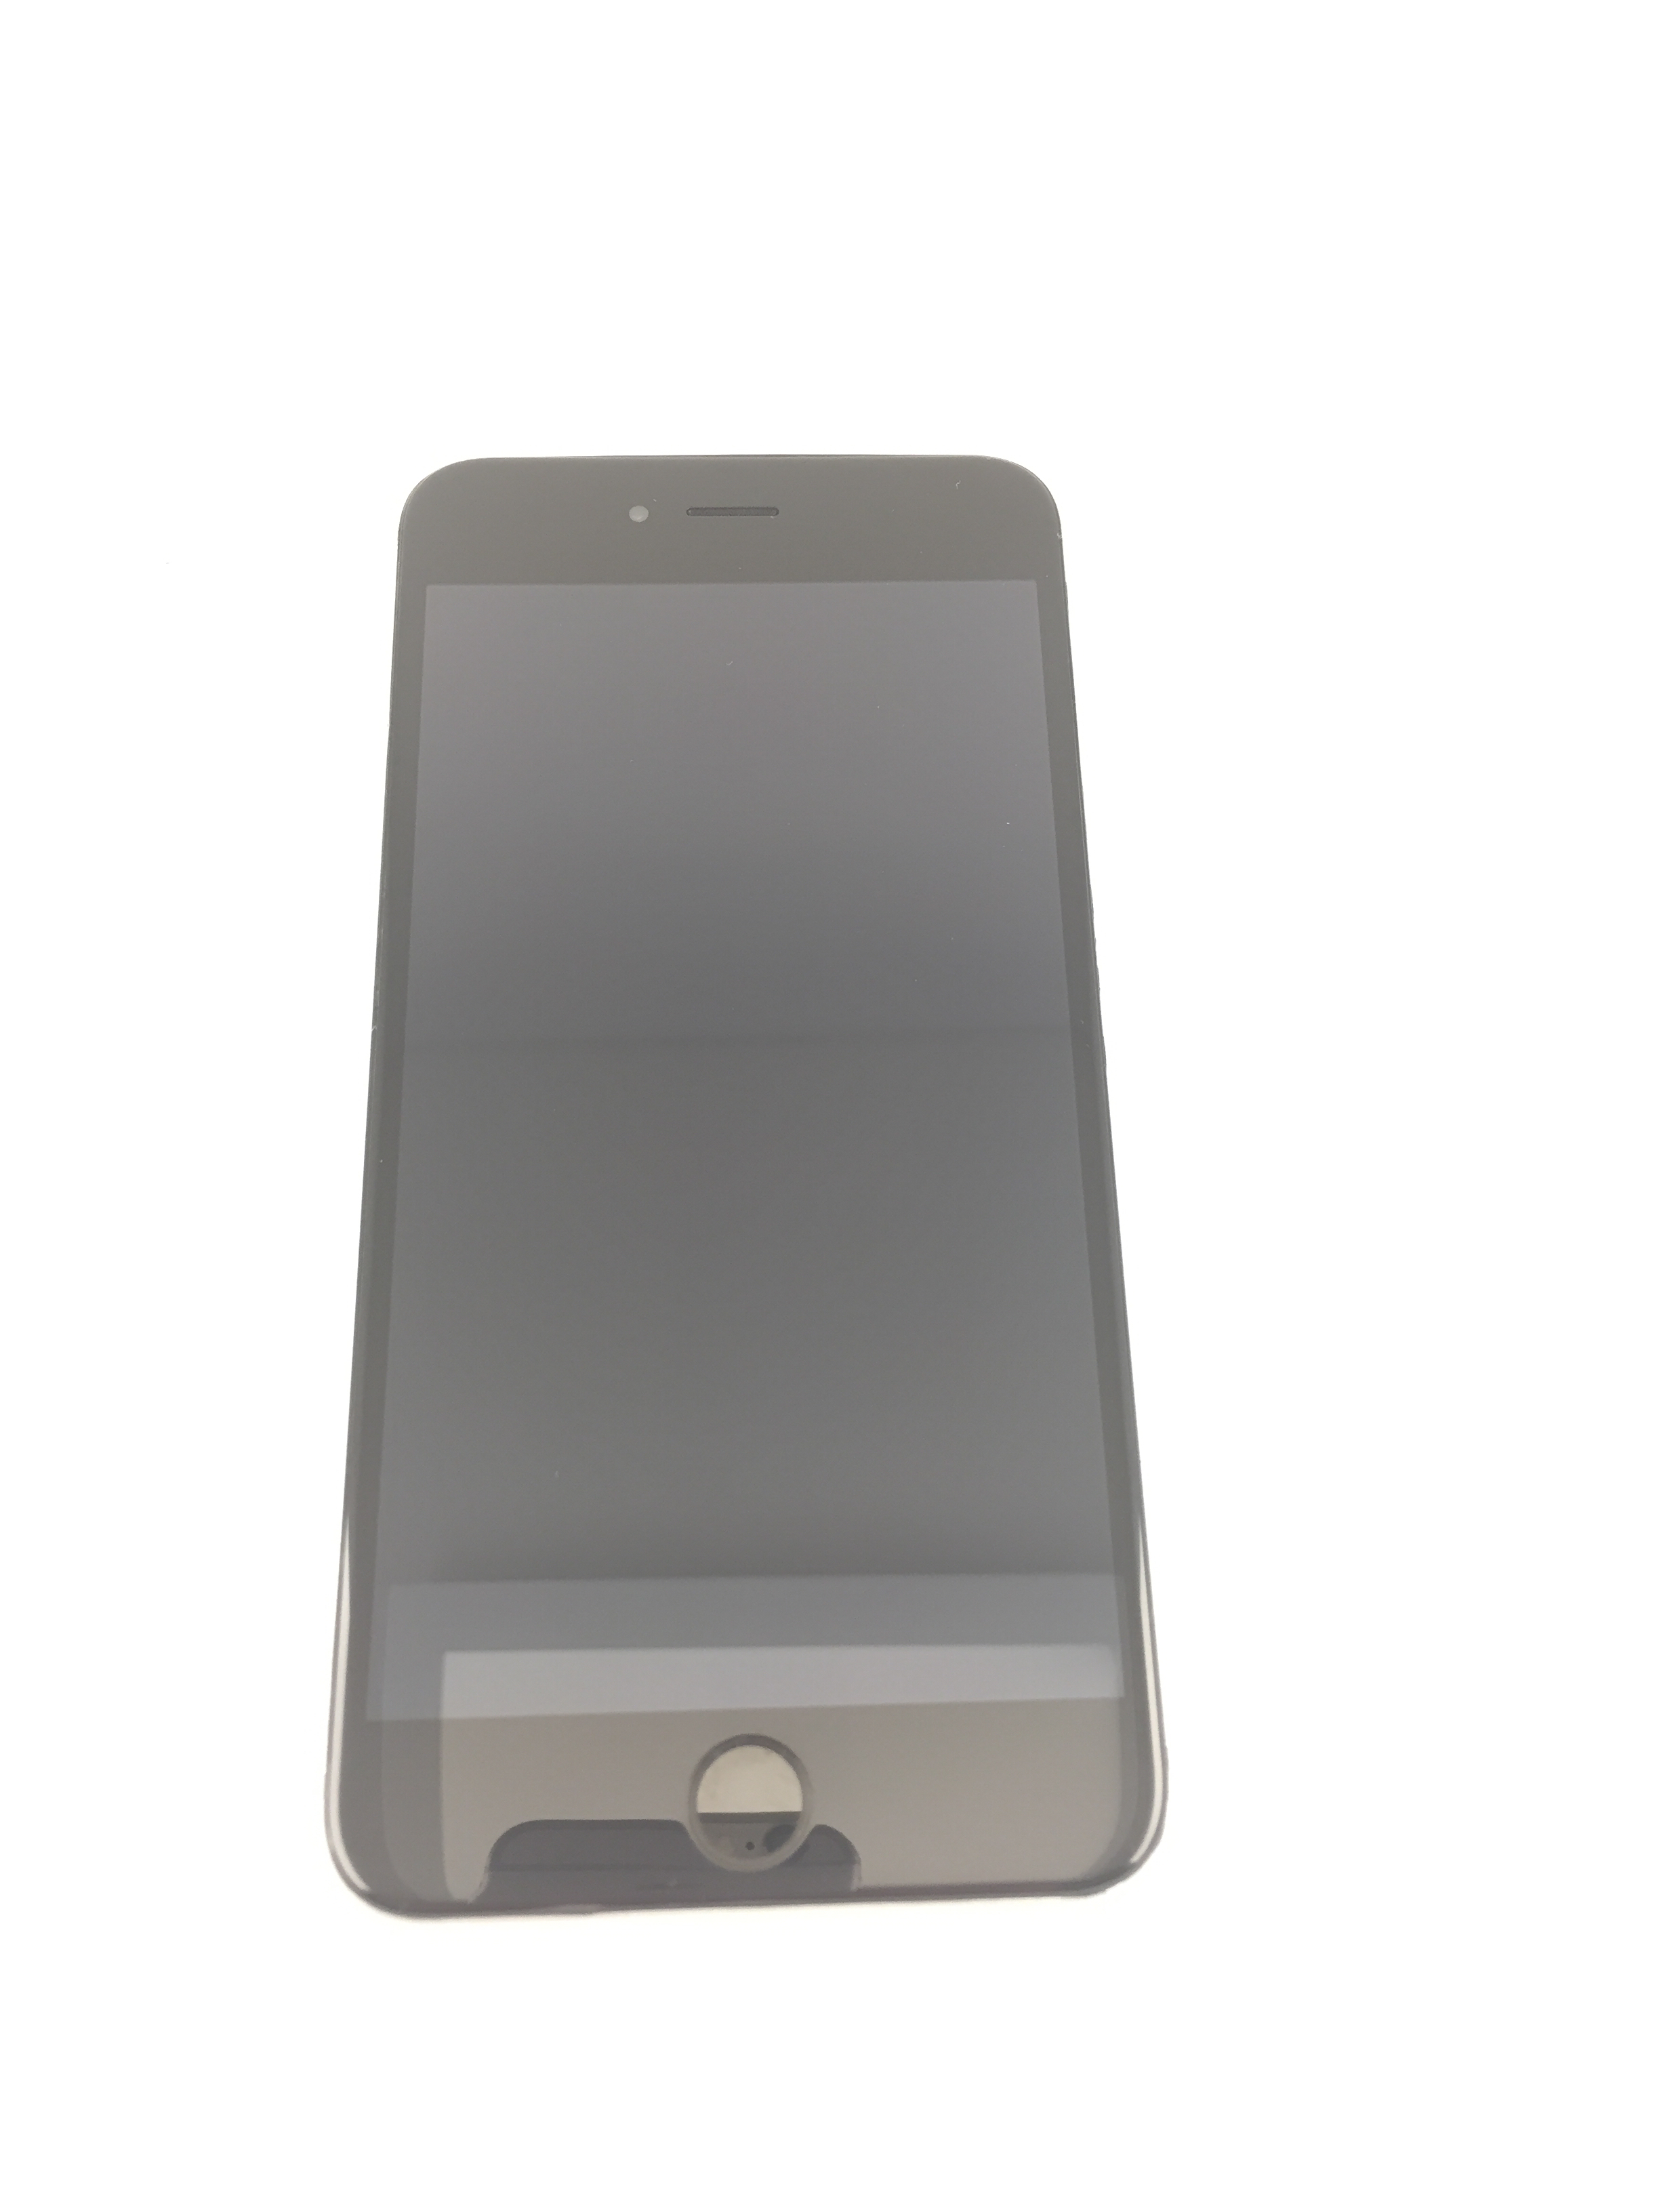 iPhone 6 Plus 16GB Space Gray OLÅST